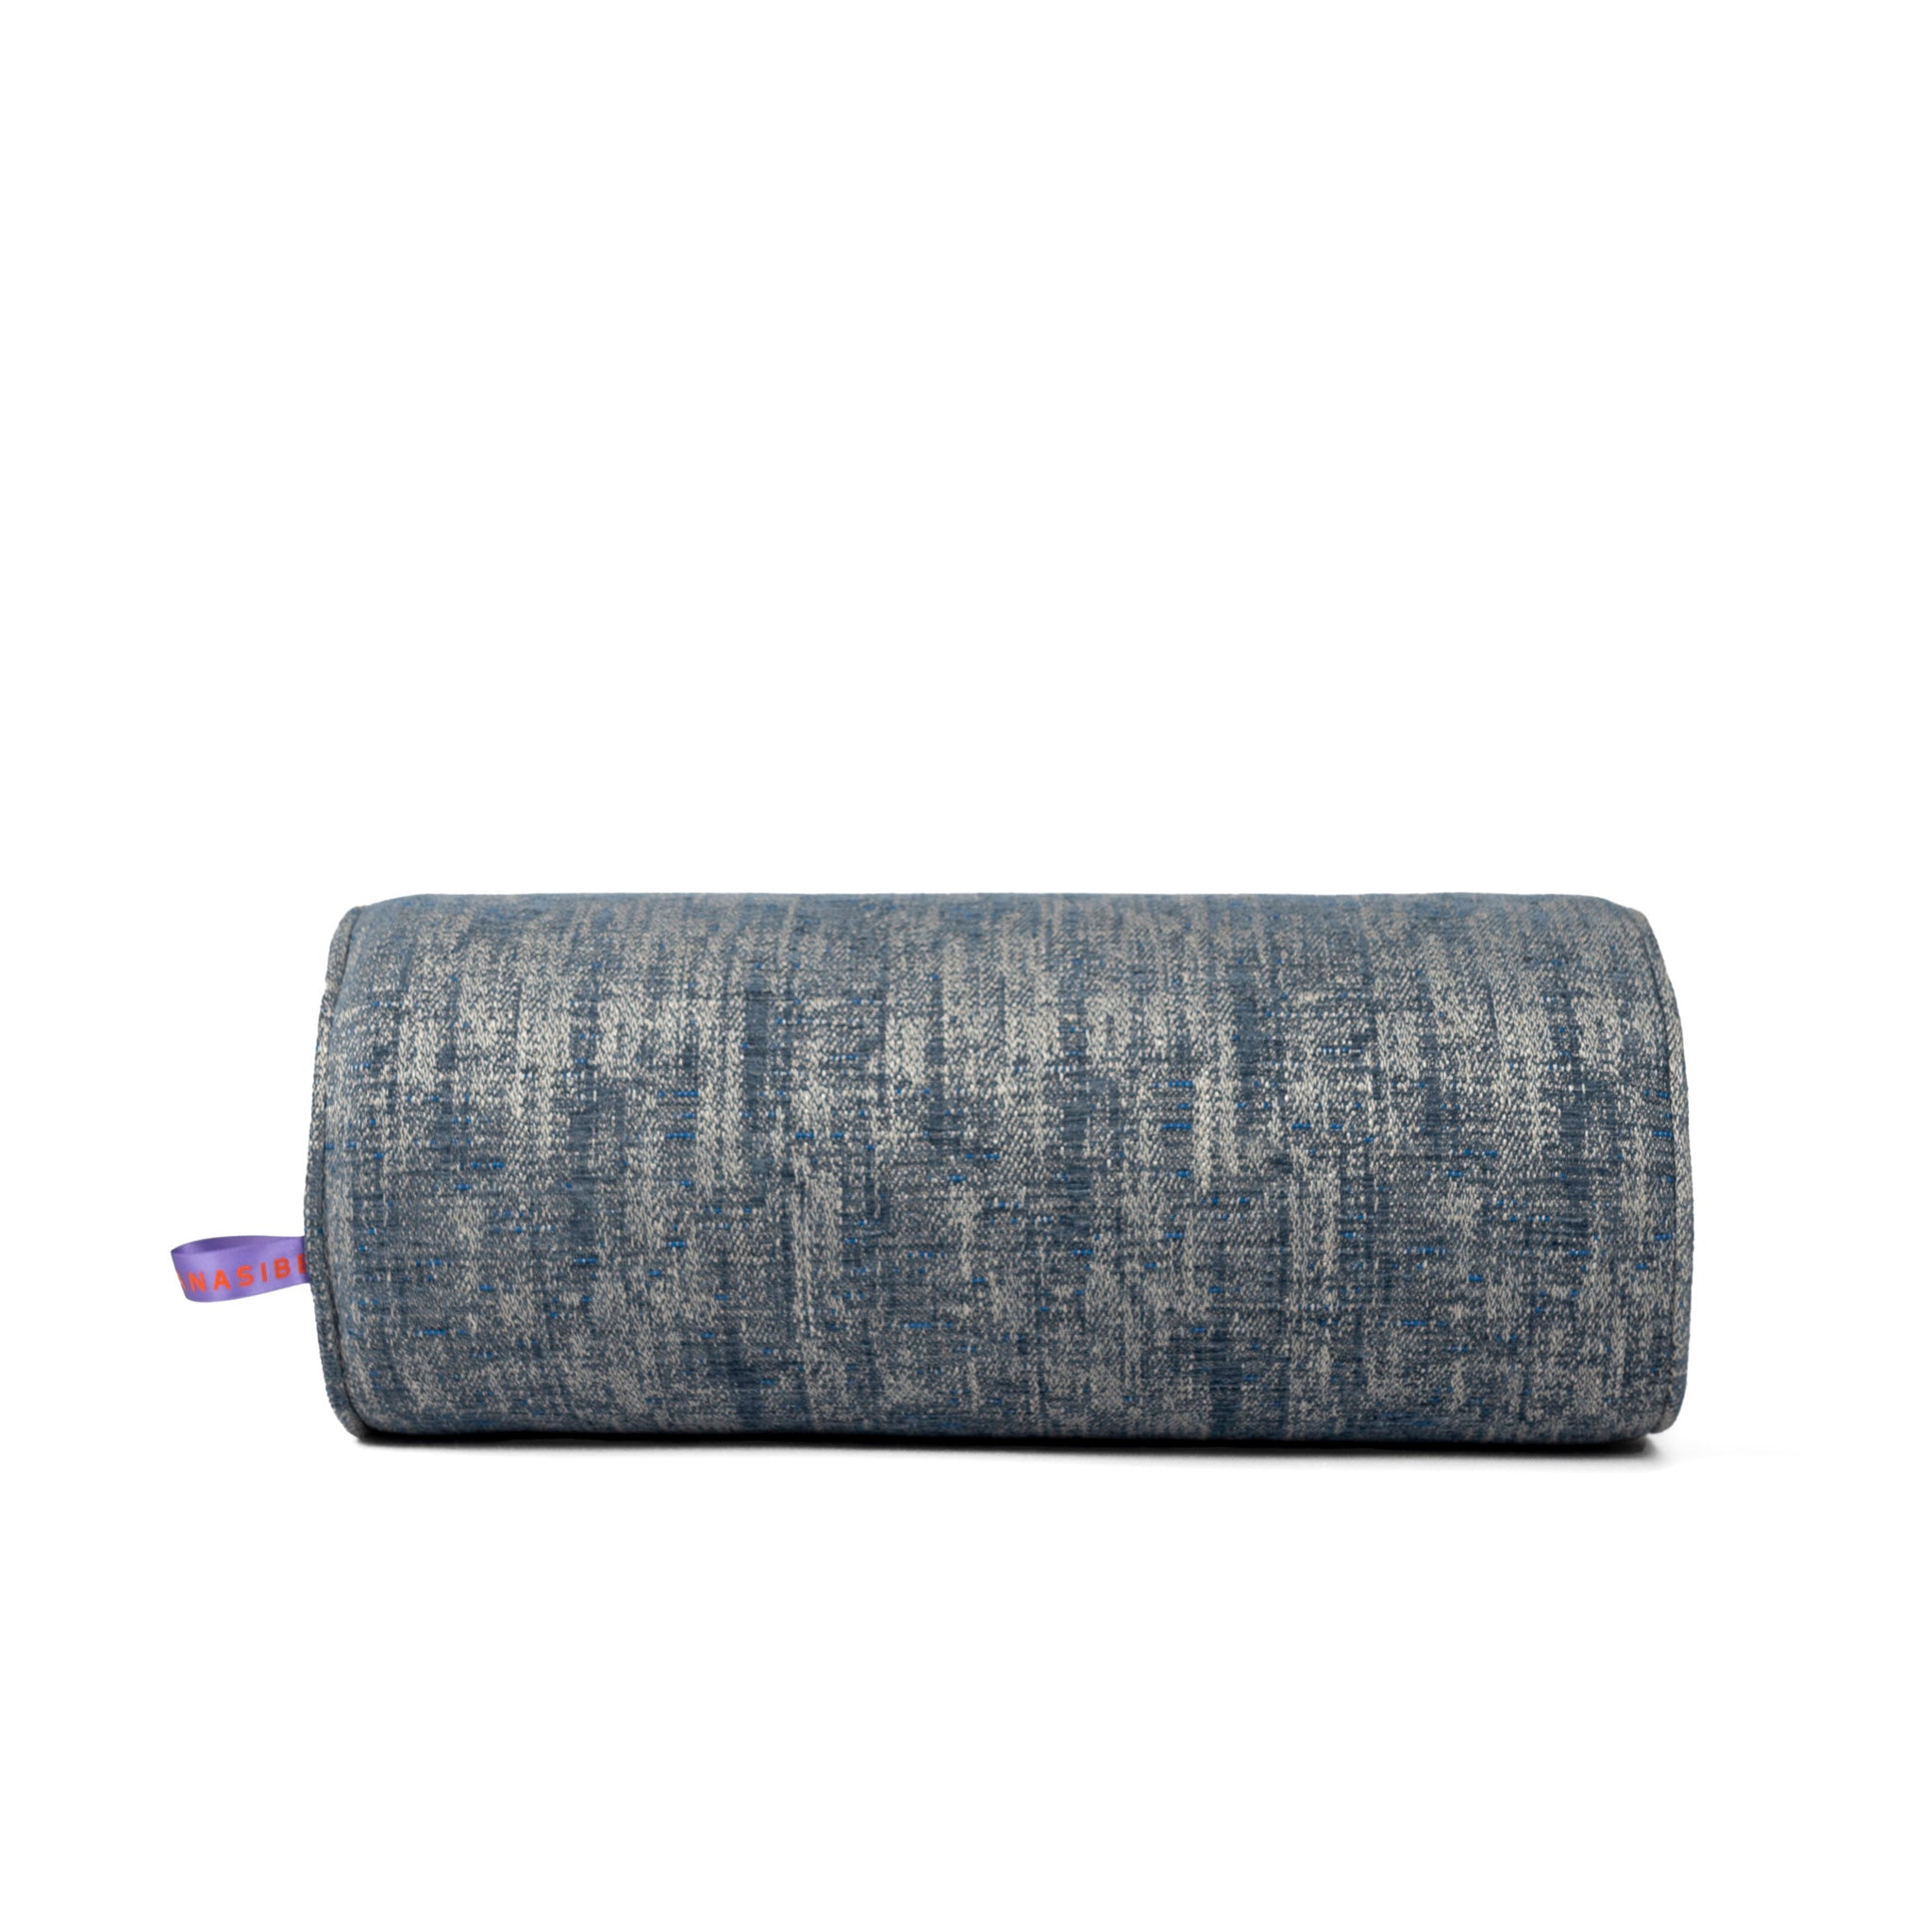 Fabric roll cushion with blue ART B77 inserts